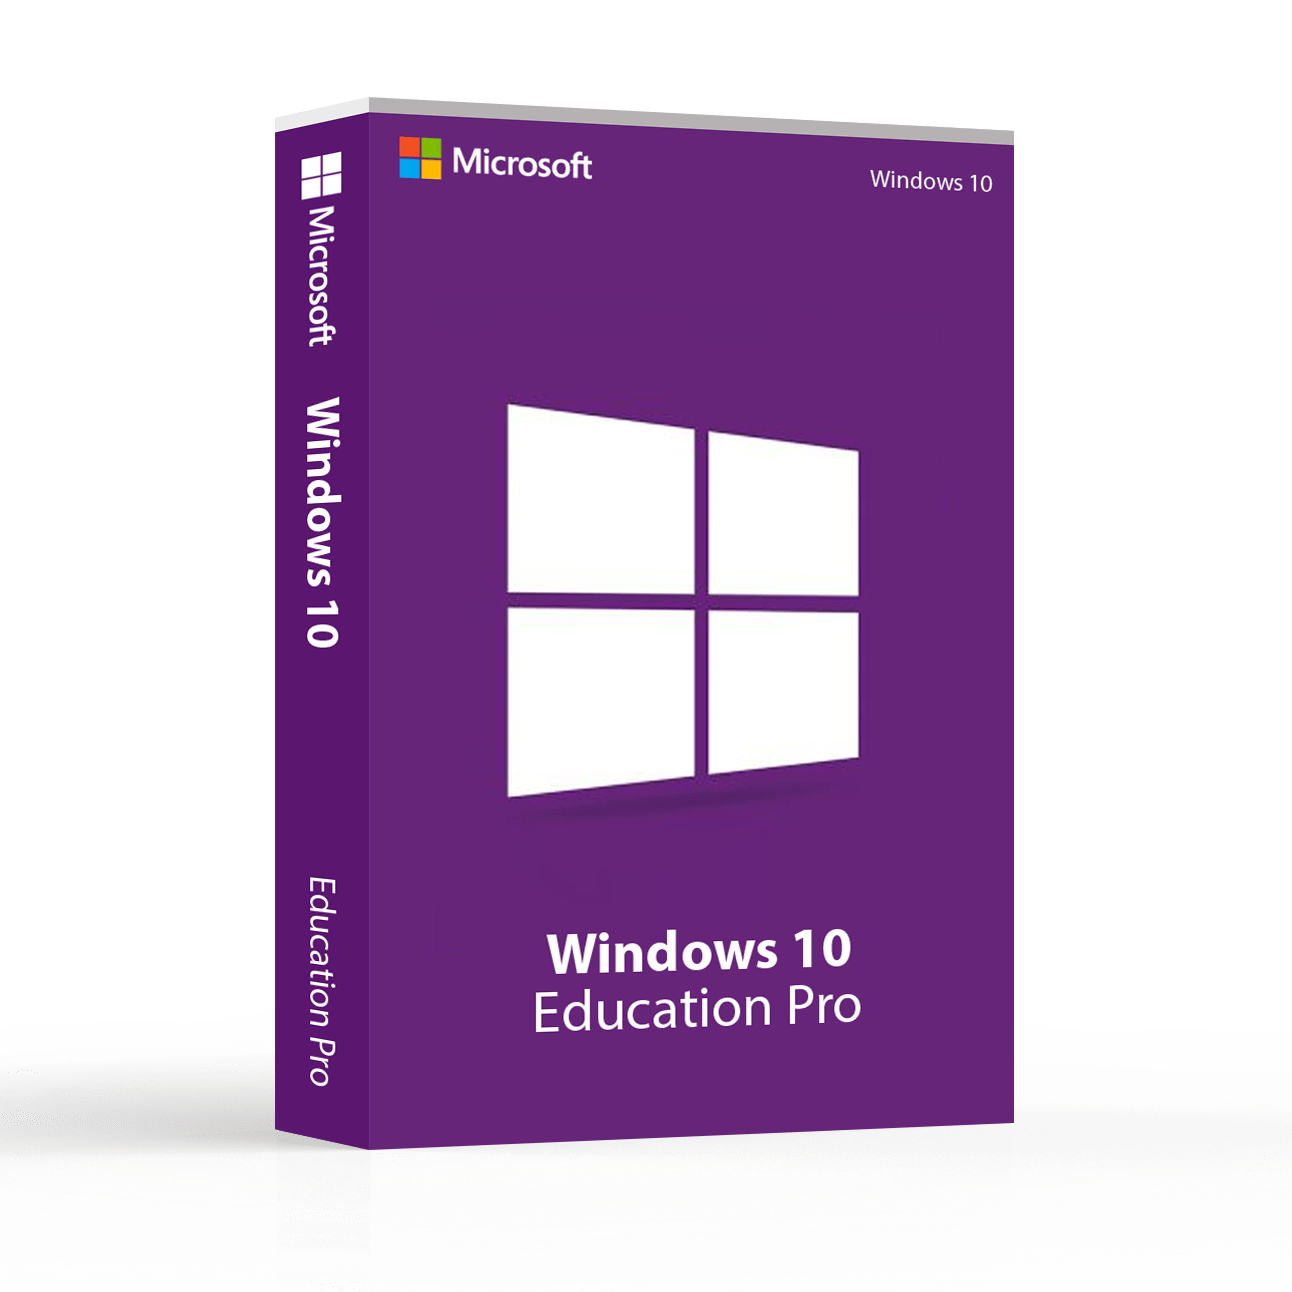 windows 10 pro education download